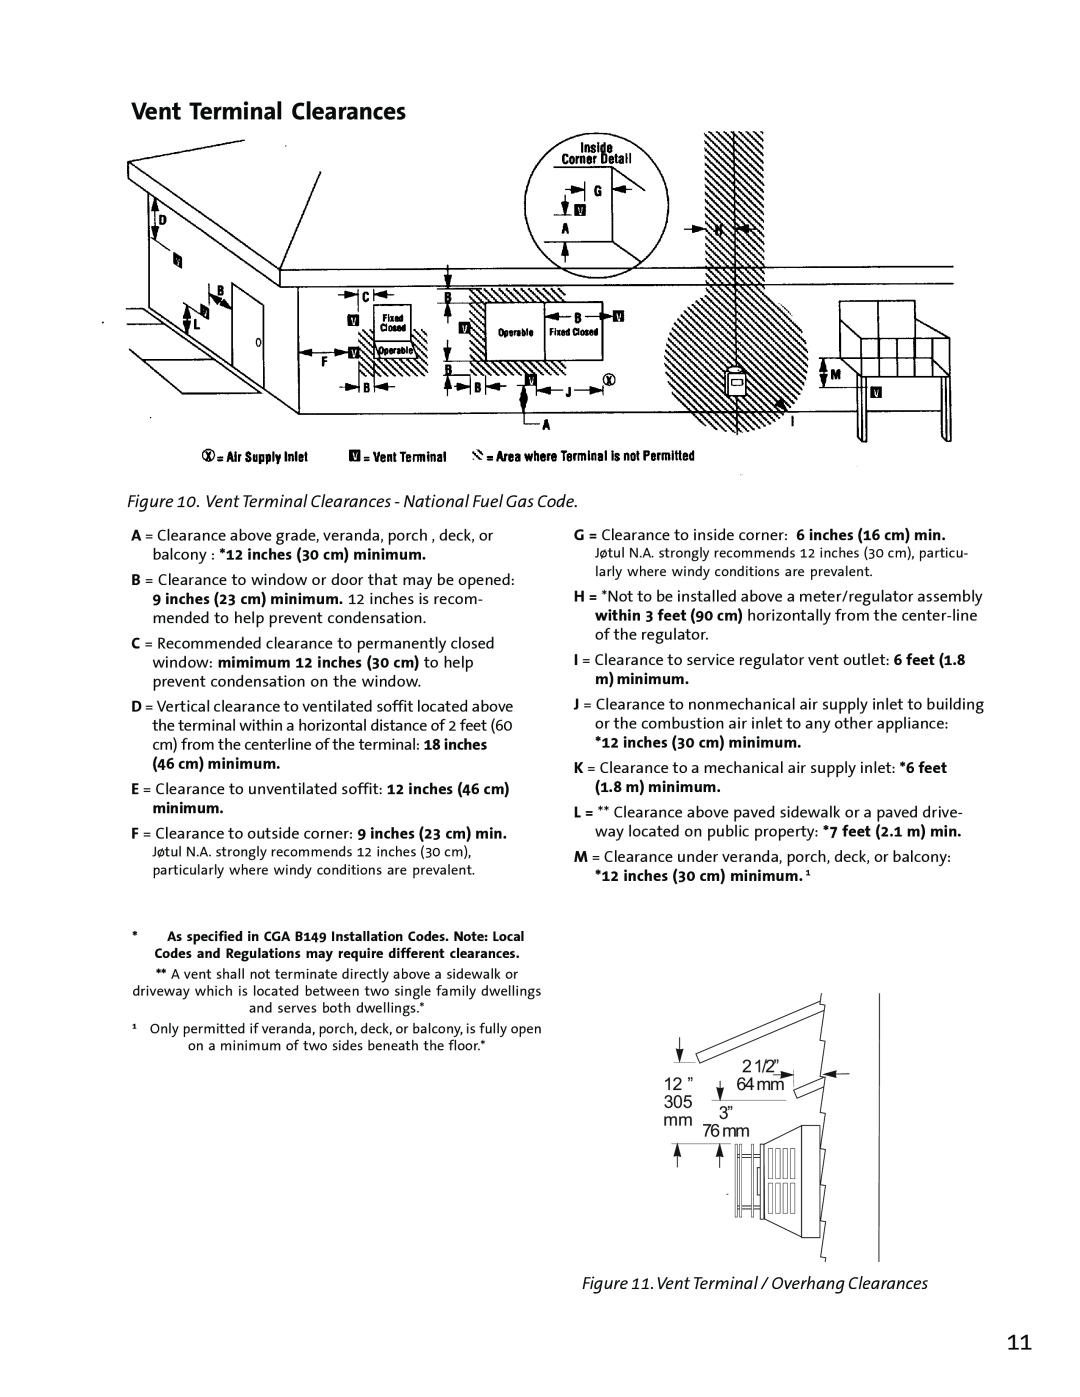 Jotul GF3 DVII manual Vent Terminal Clearances, 12 ”, 64mm, 3053” mm 76mm 